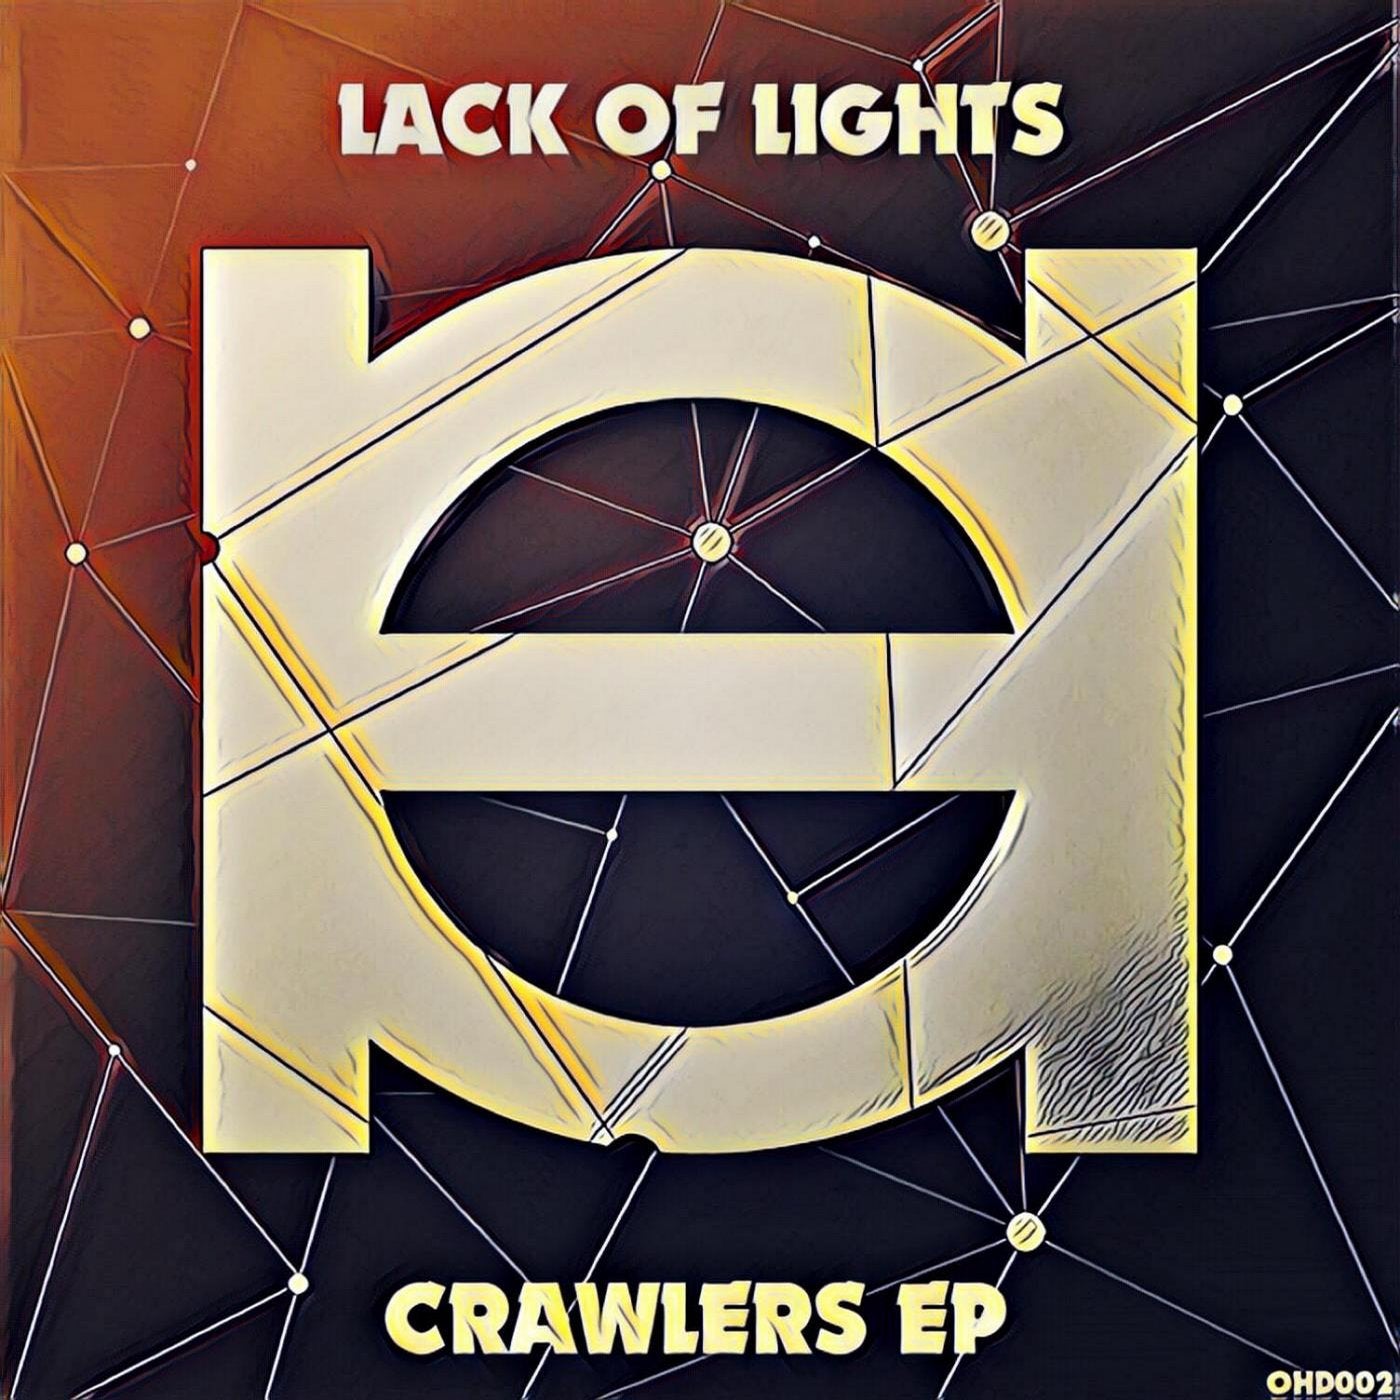 Crawlers EP